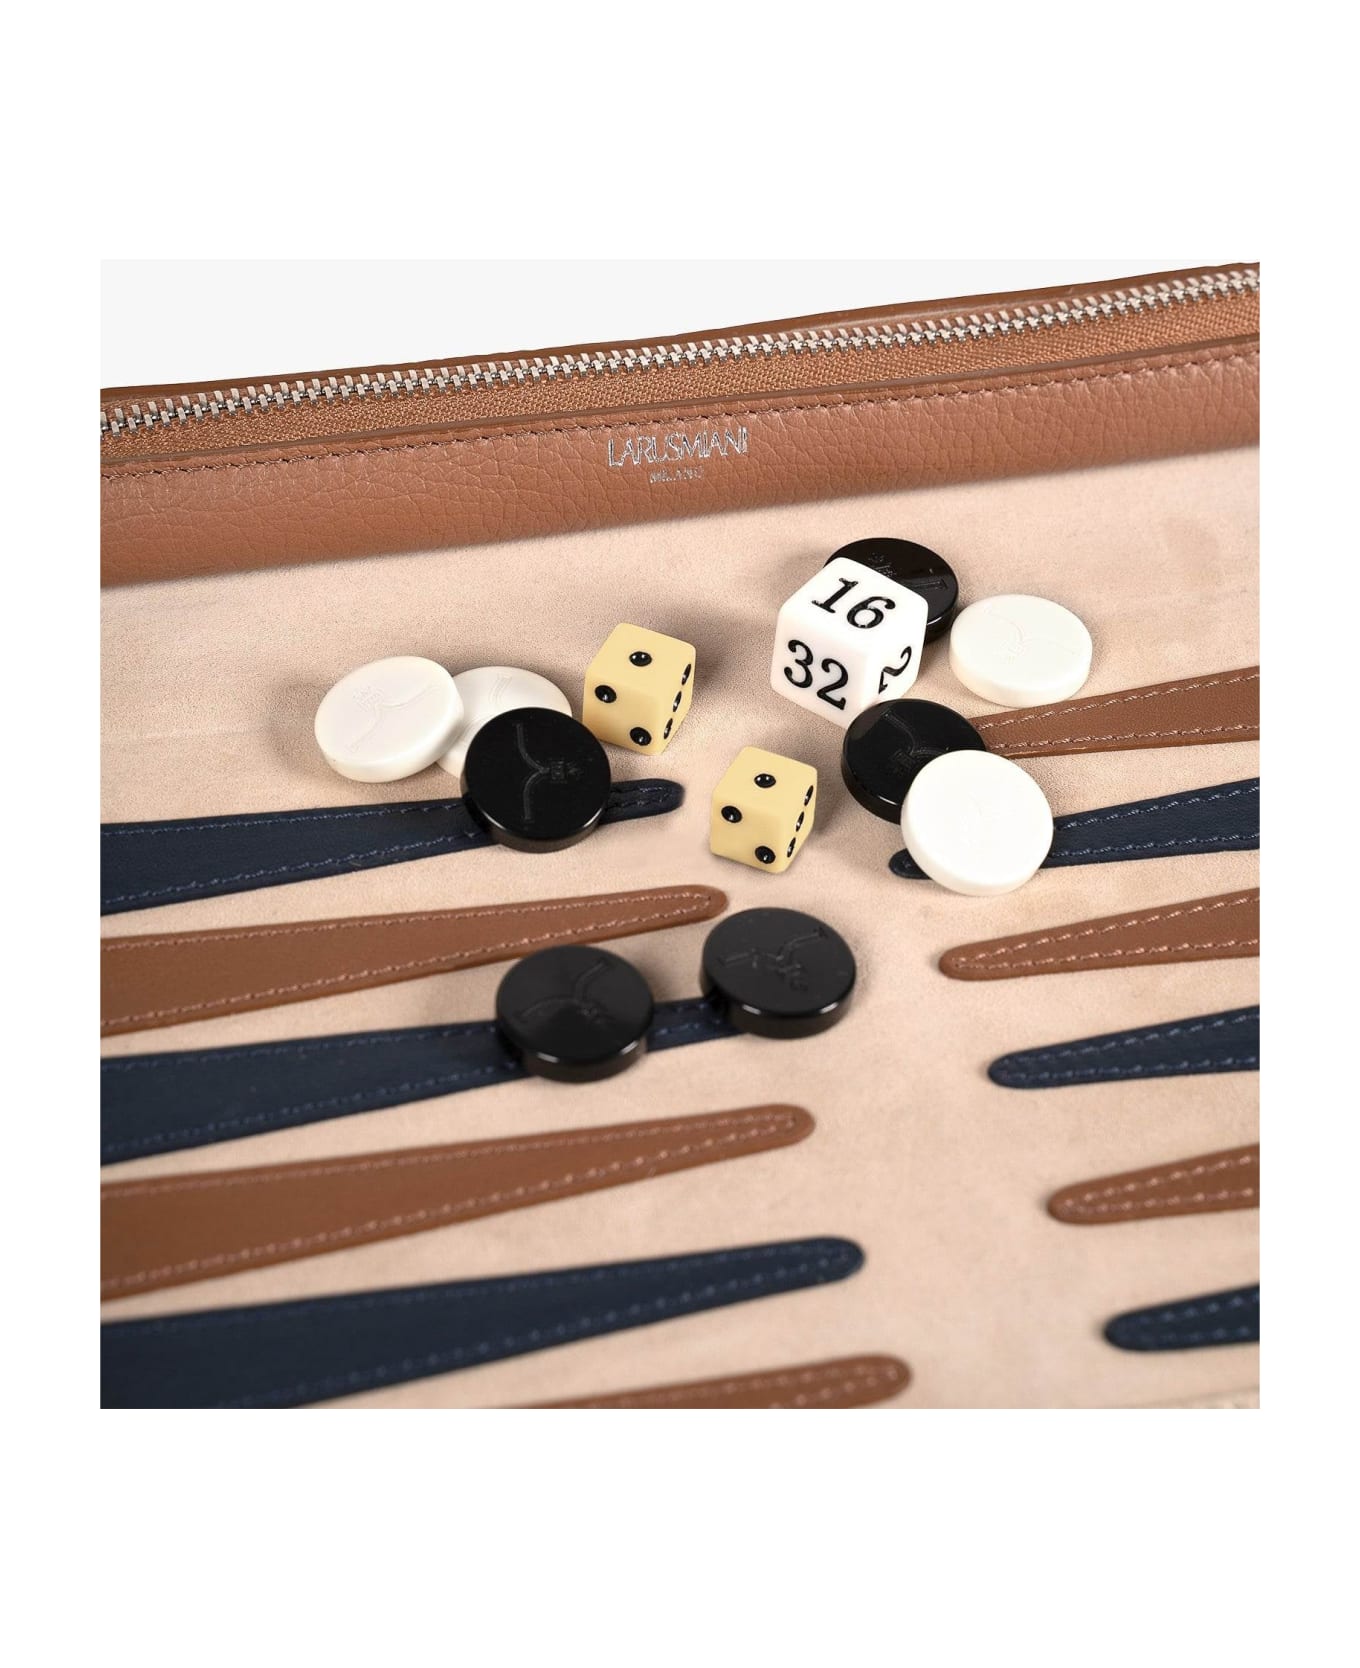 Larusmiani Travel Backgammon Game - Brown